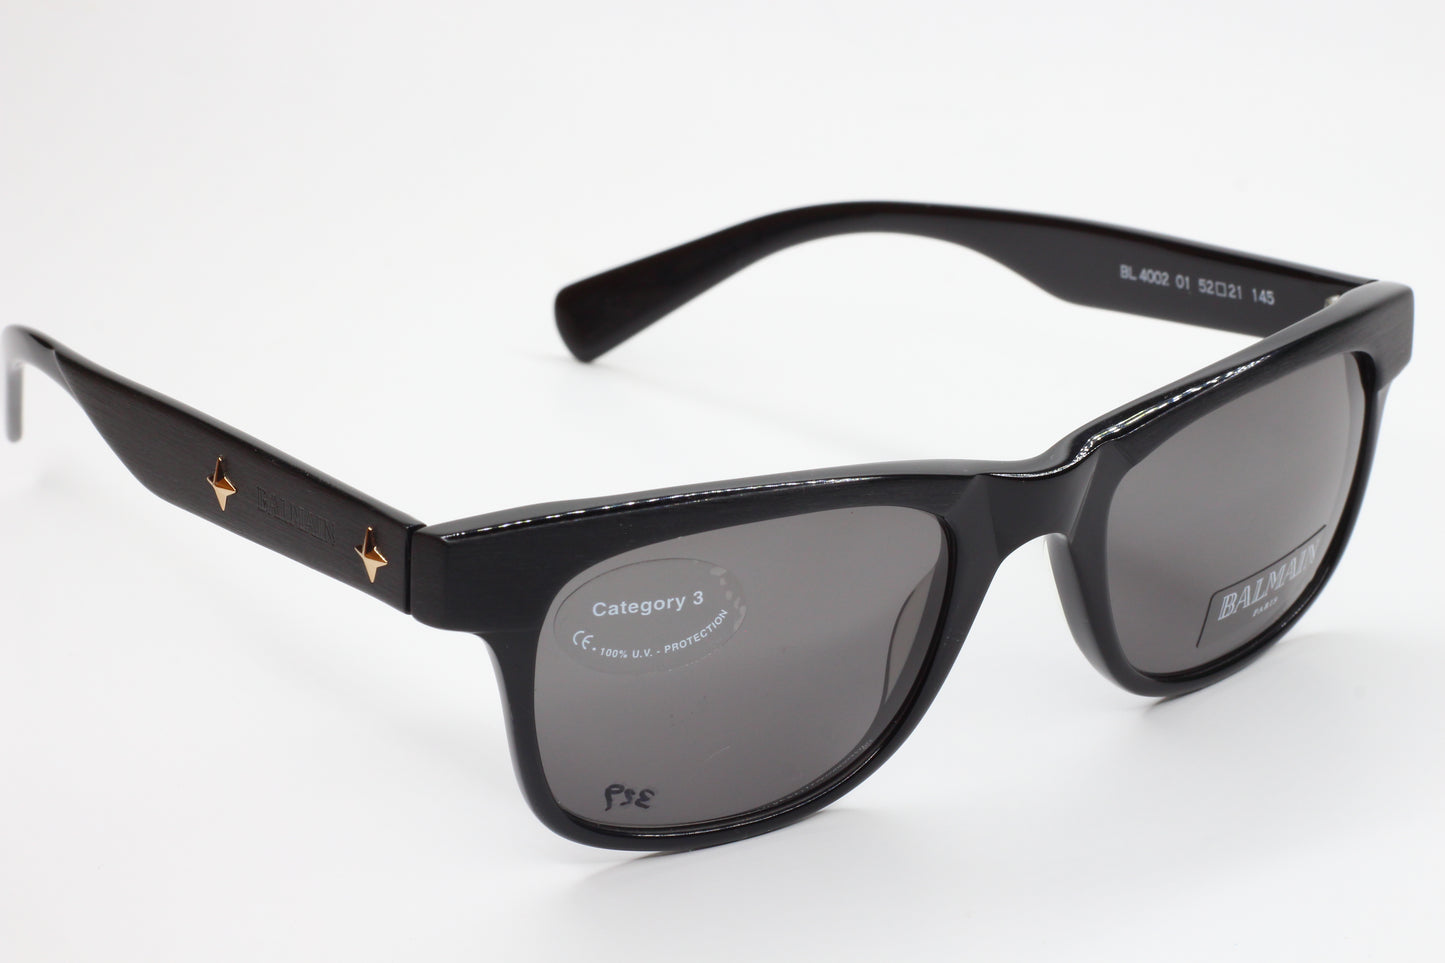 Balmain BL4002 01 Black Acetate Square UV Protection Luxury Sunglasses - Men, sunglasses